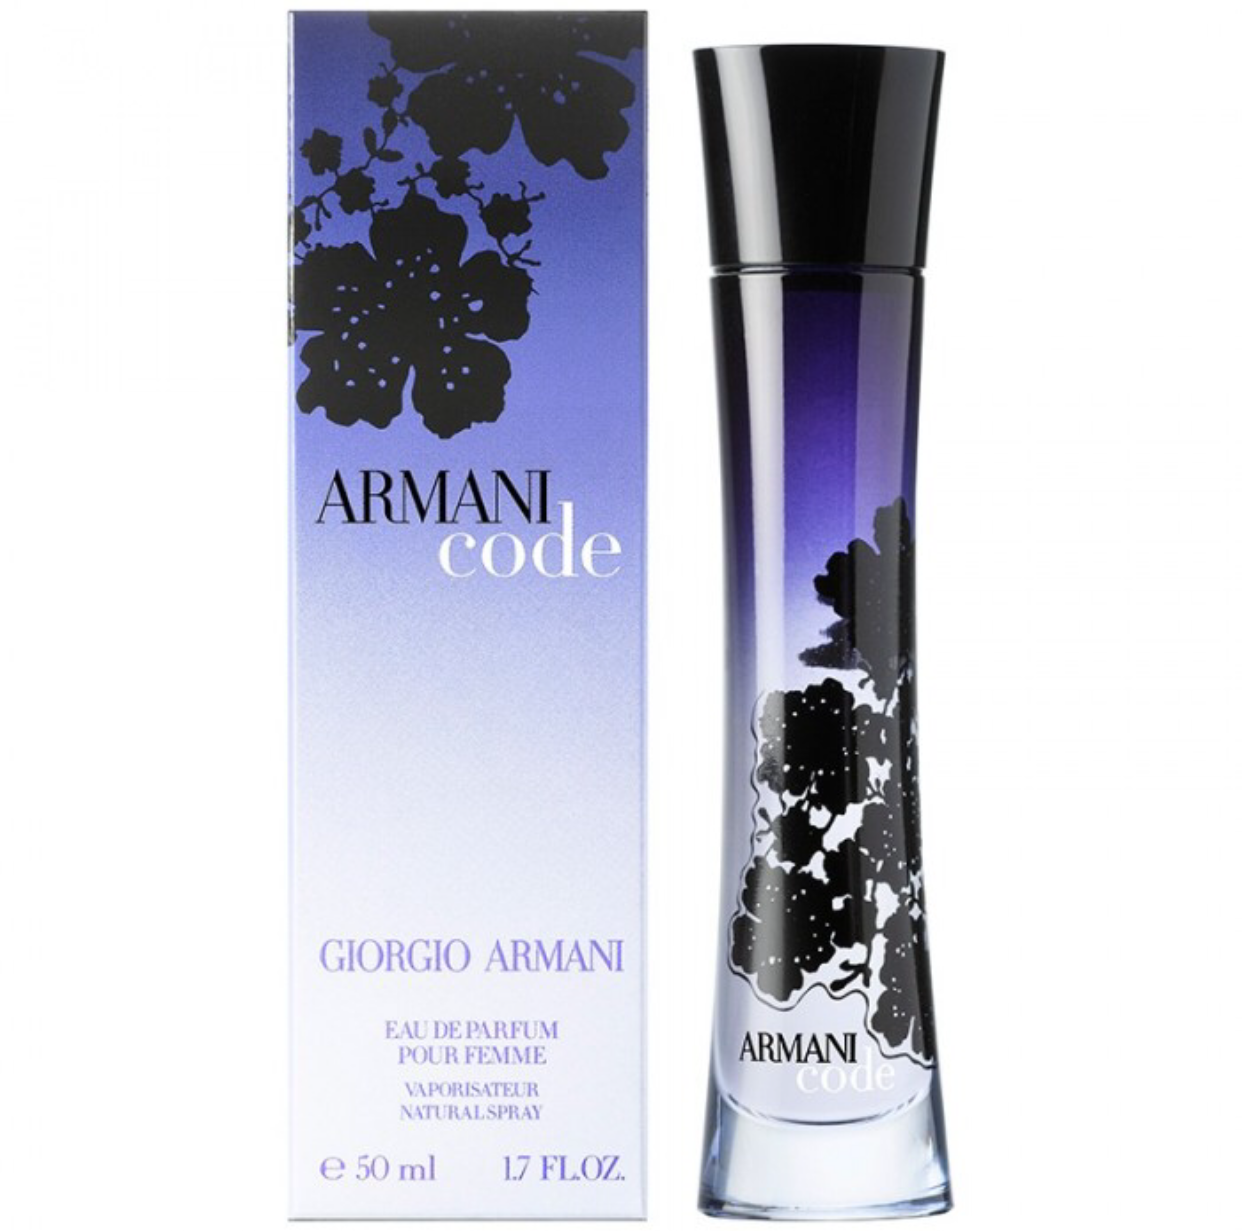 armani code mens gift set